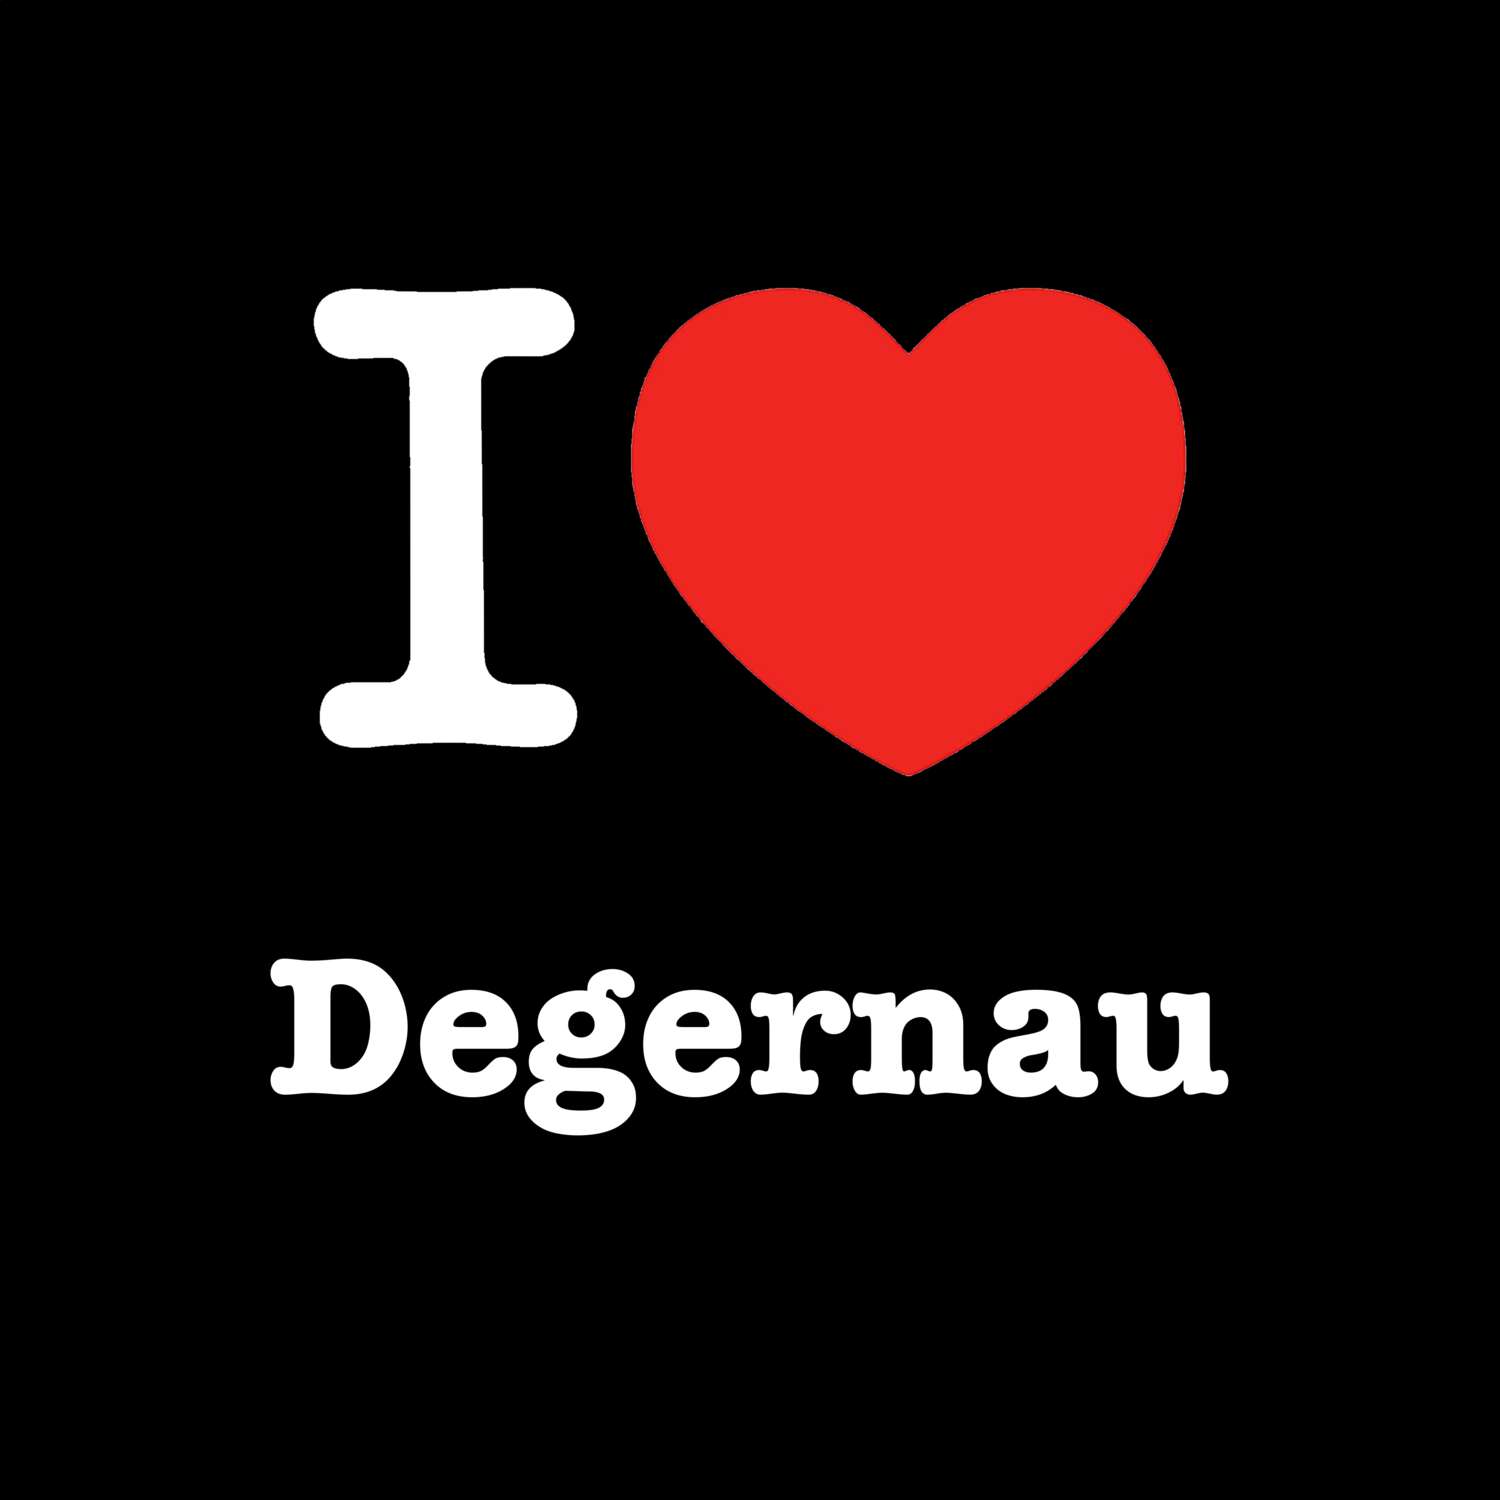 Degernau T-Shirt »I love«